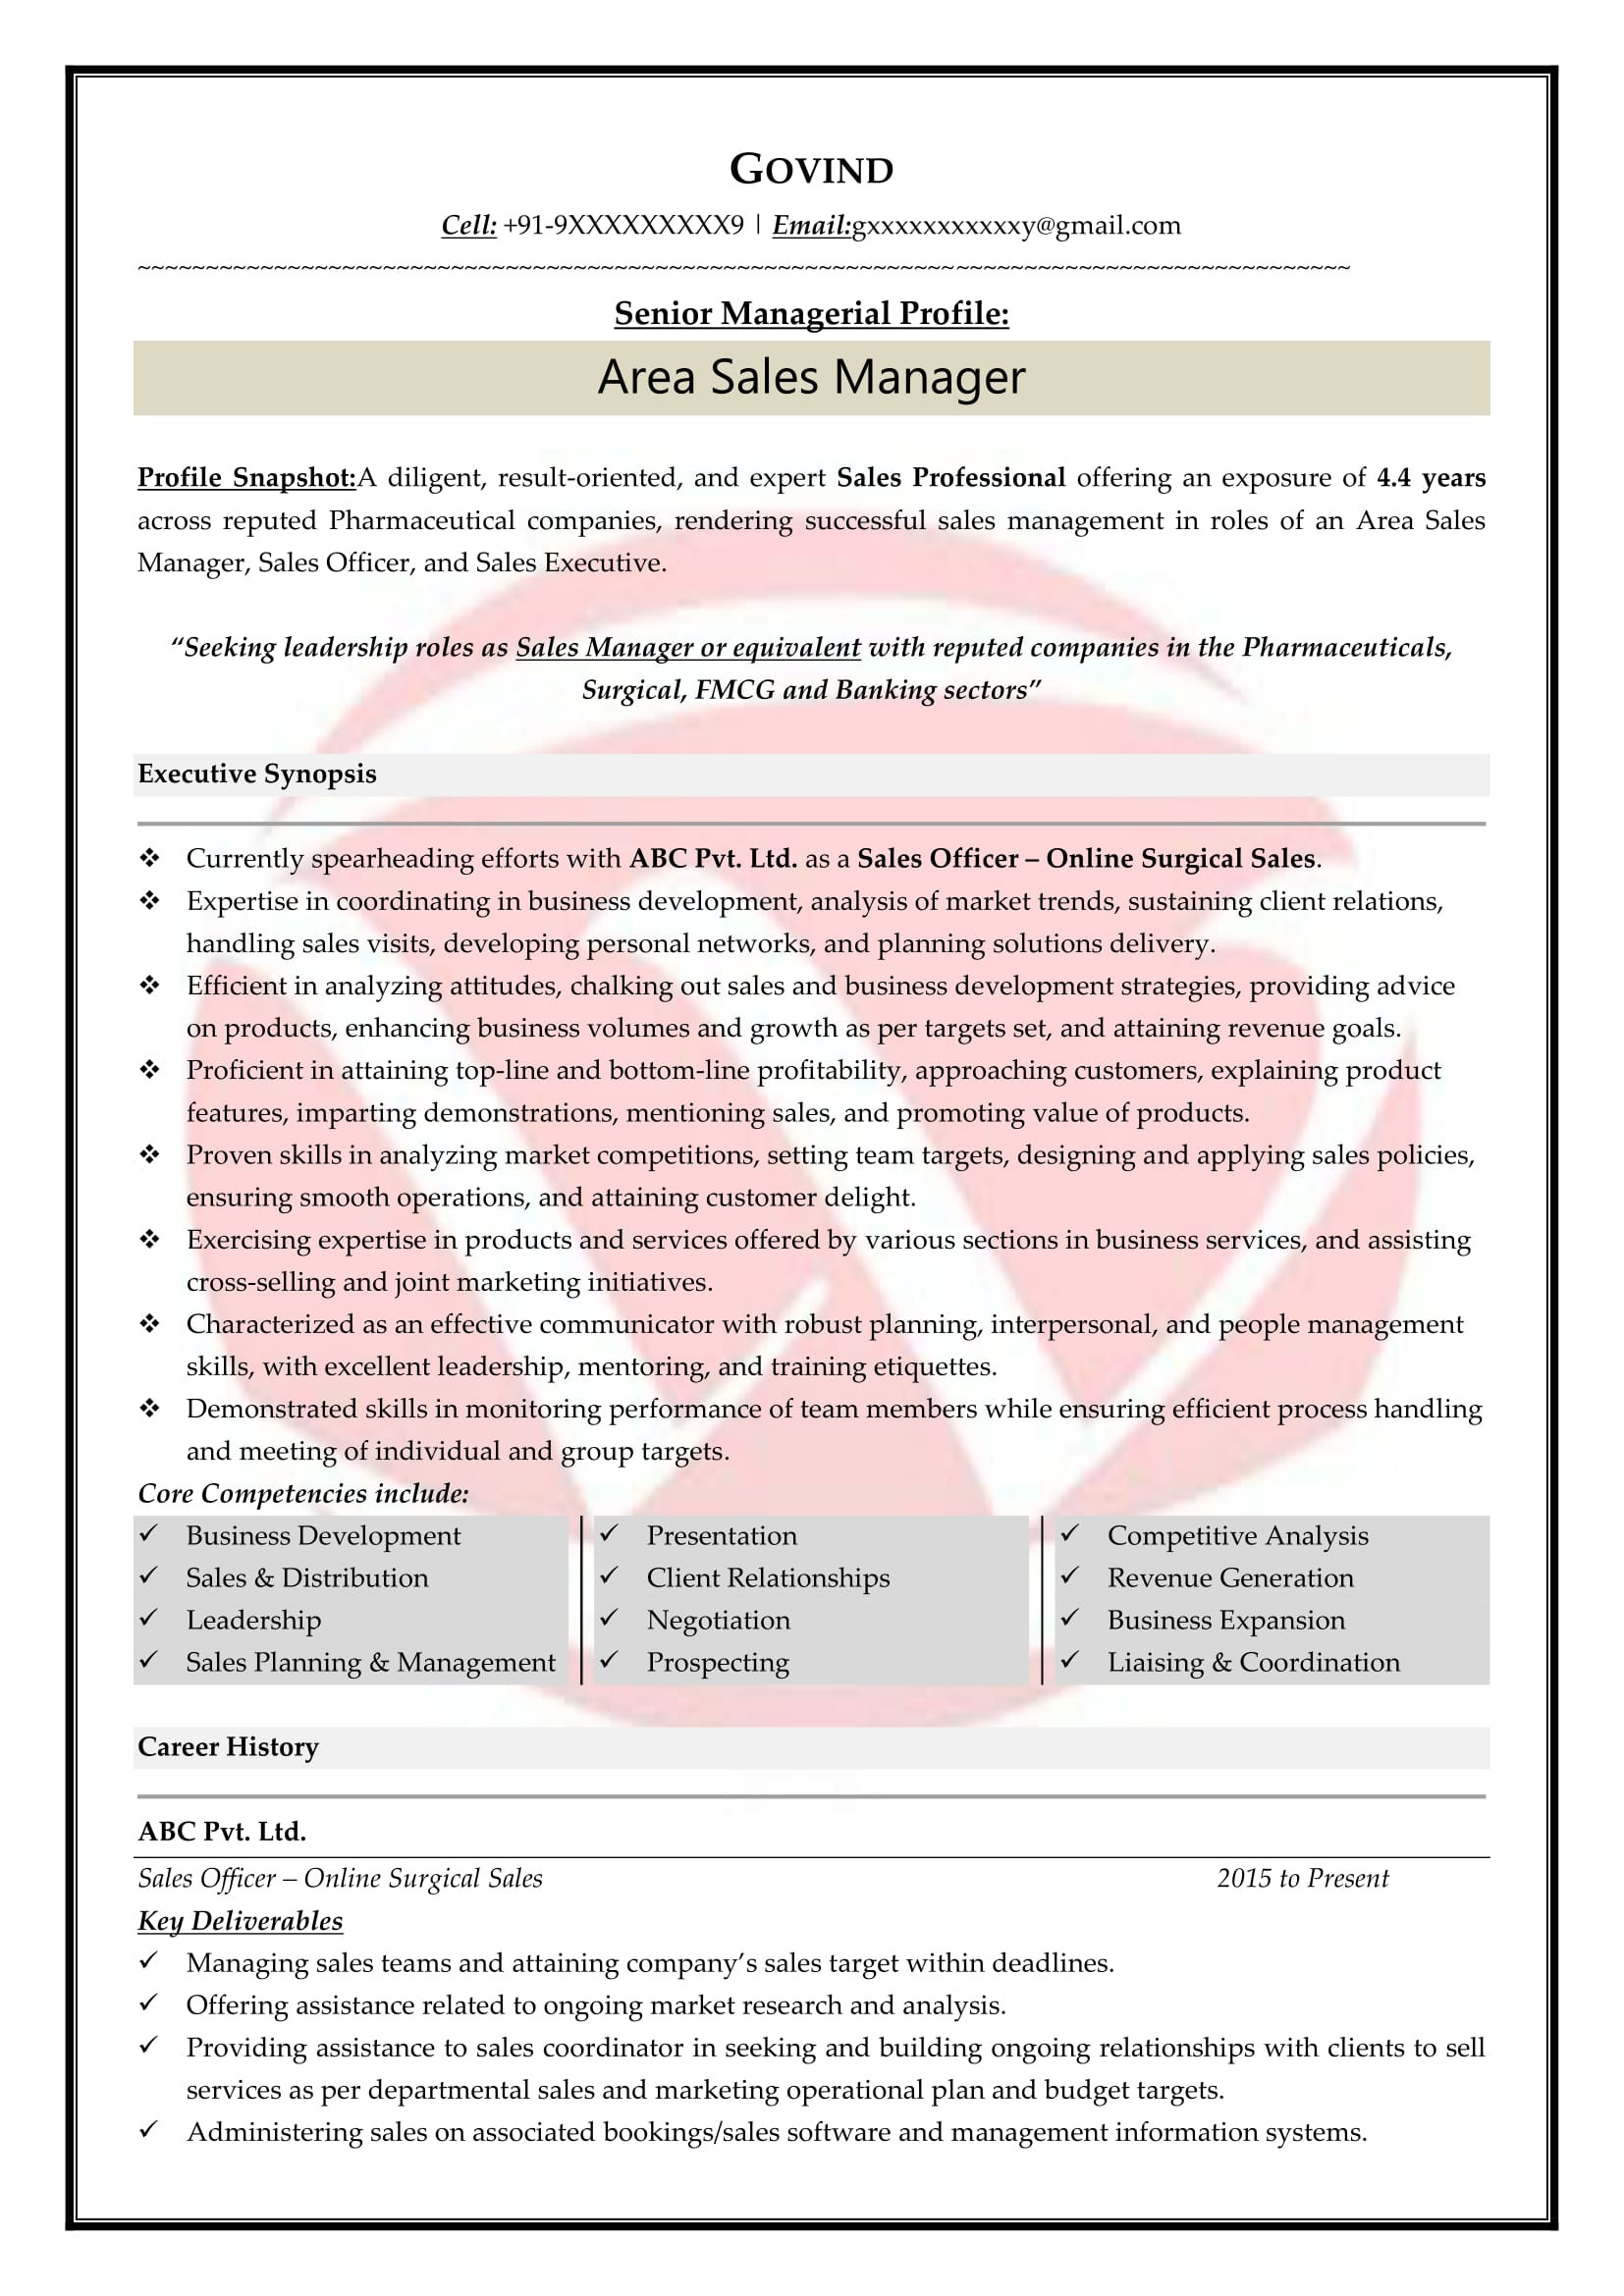 Sample Resume Of Fmcg Sales Executive Sales Sample Resumes, Download Resume format Templates!